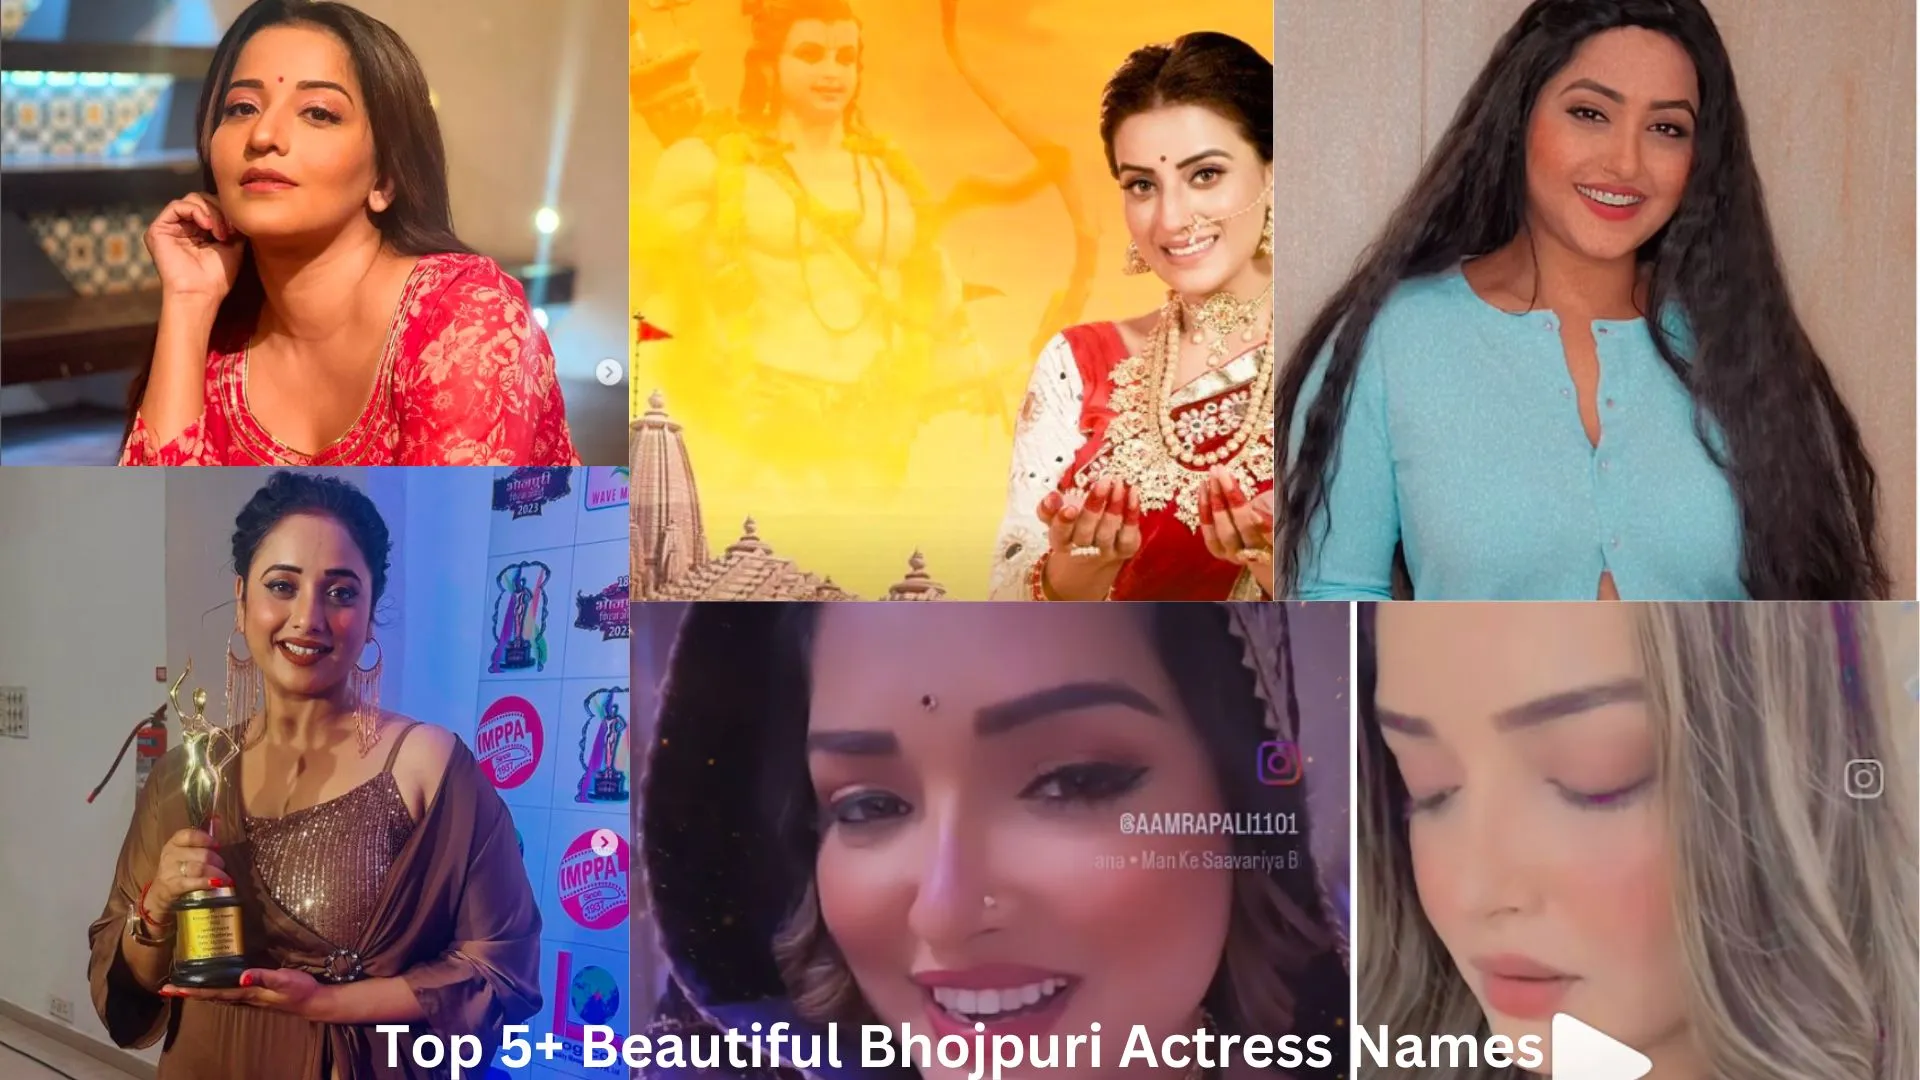 Bhojpuri Actress